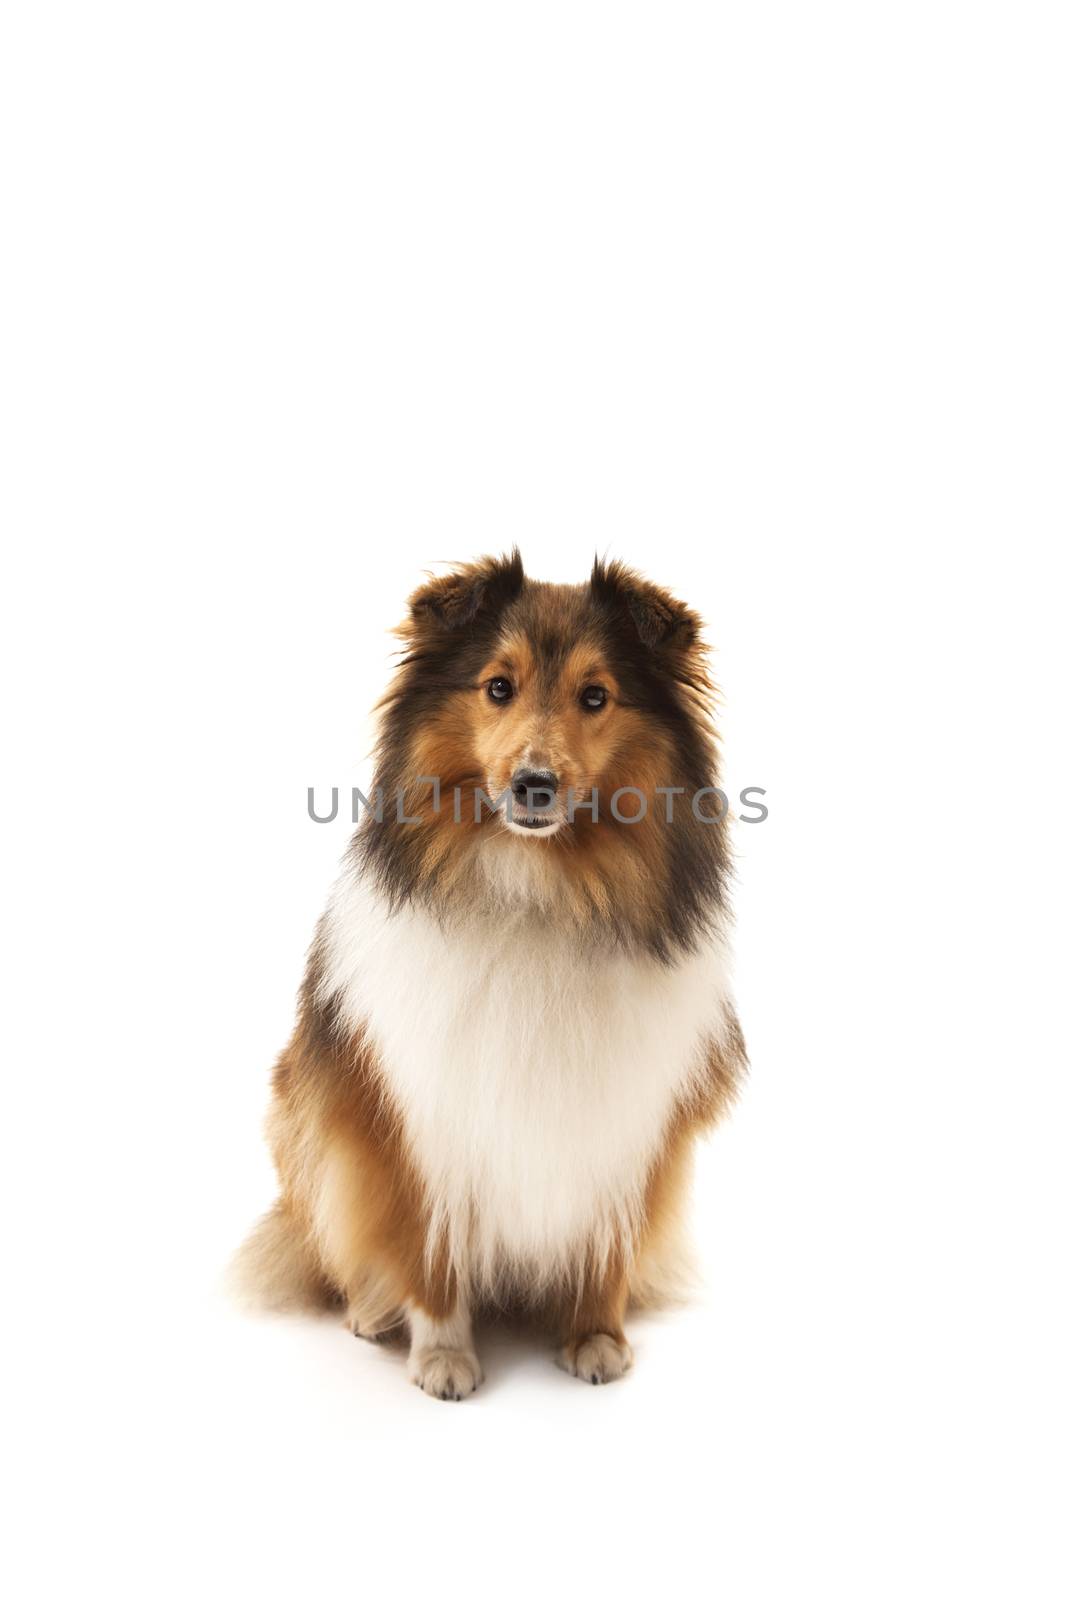 Portrait of Shetland sheepdog over white background